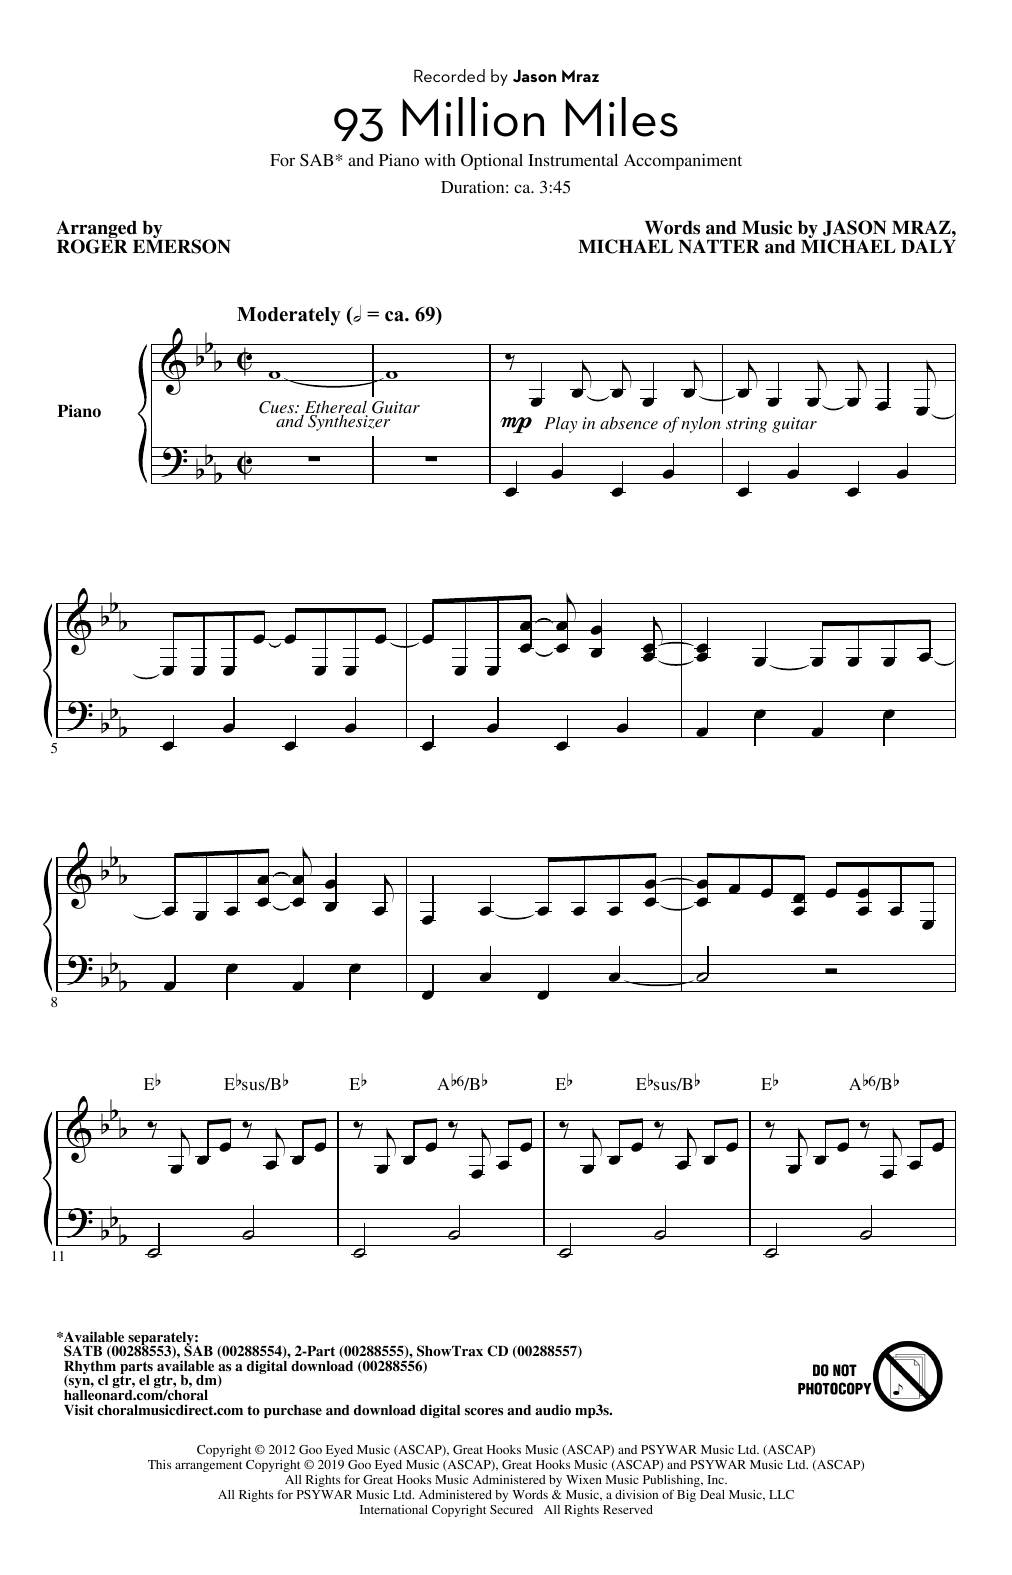 Jason Mraz 93 Million Miles (arr. Roger Emerson) Sheet Music Notes & Chords for SAB Choir - Download or Print PDF